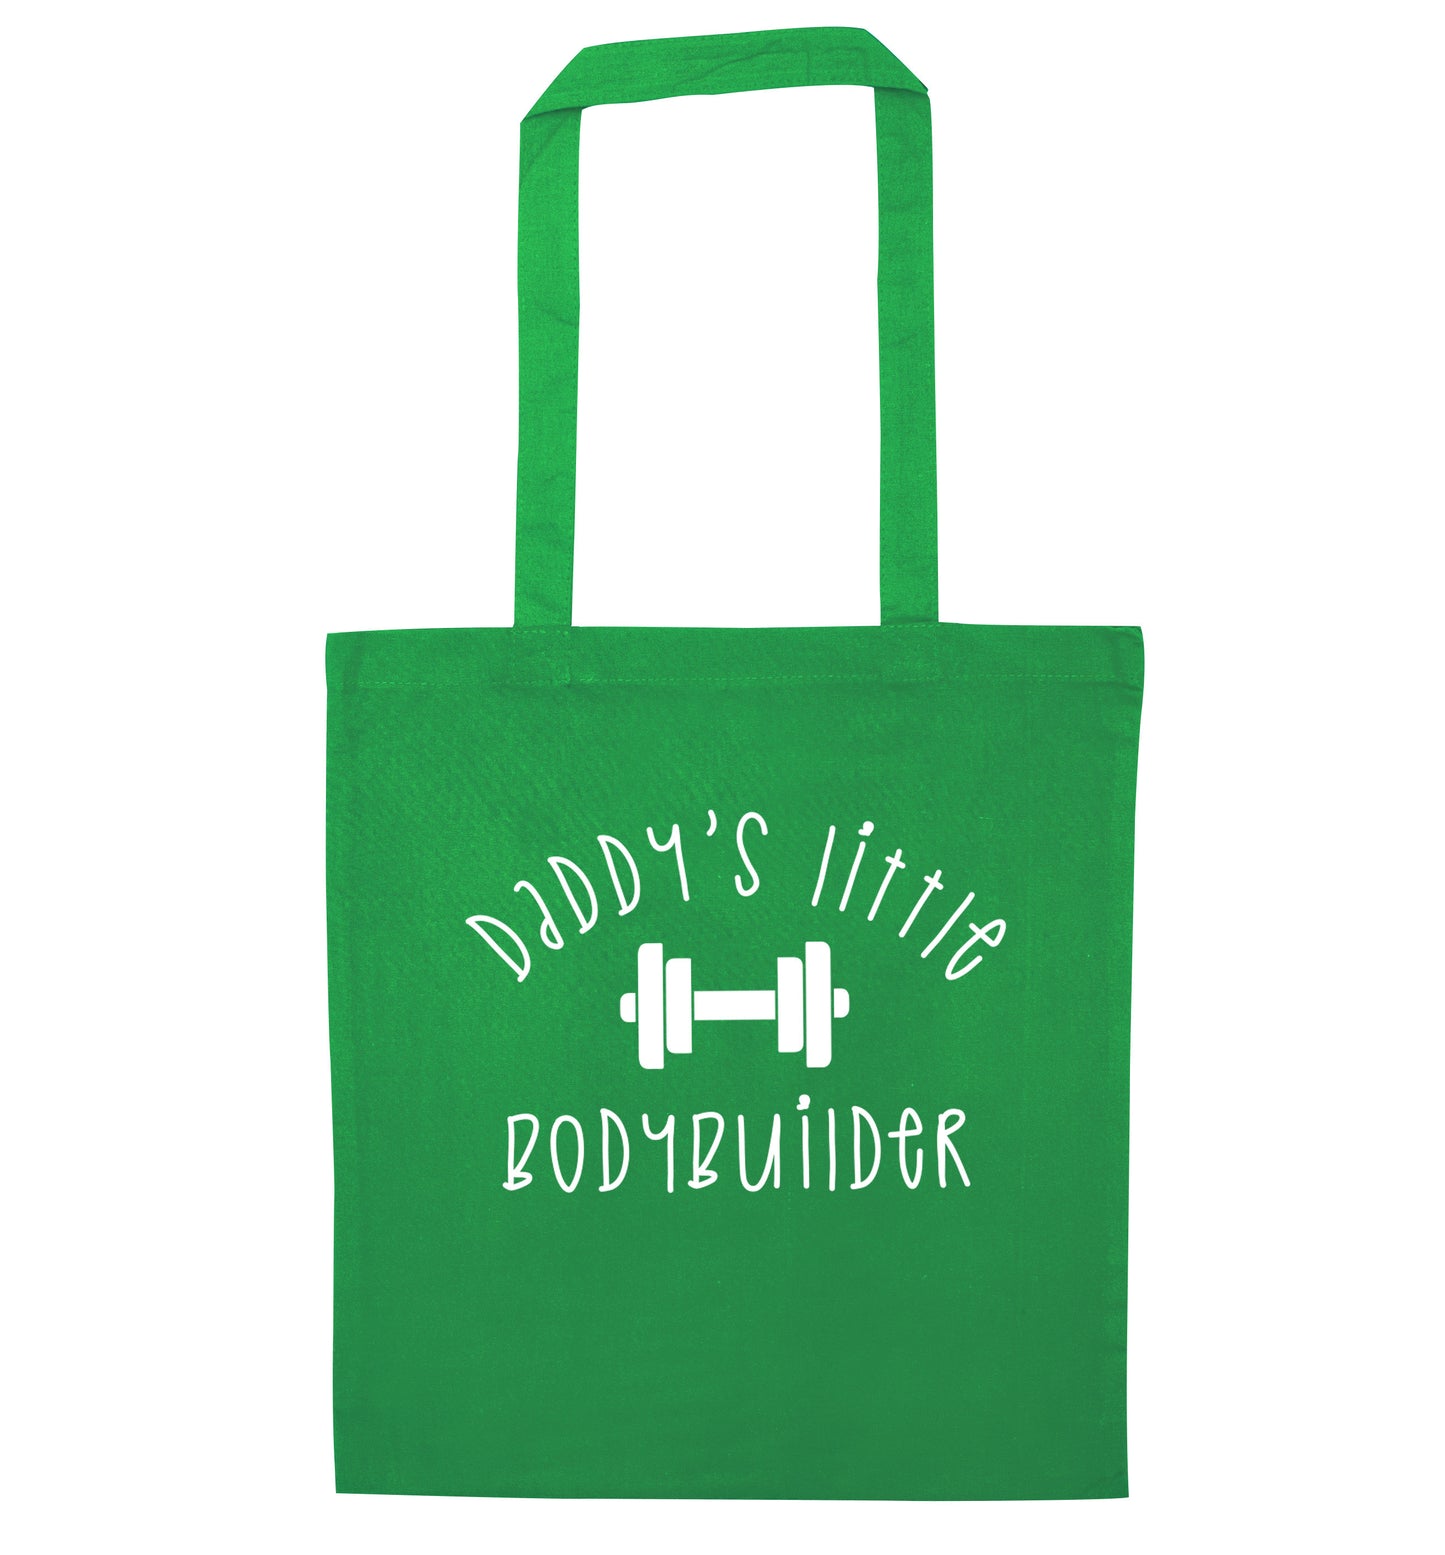 Daddy's little bodybuilder green tote bag